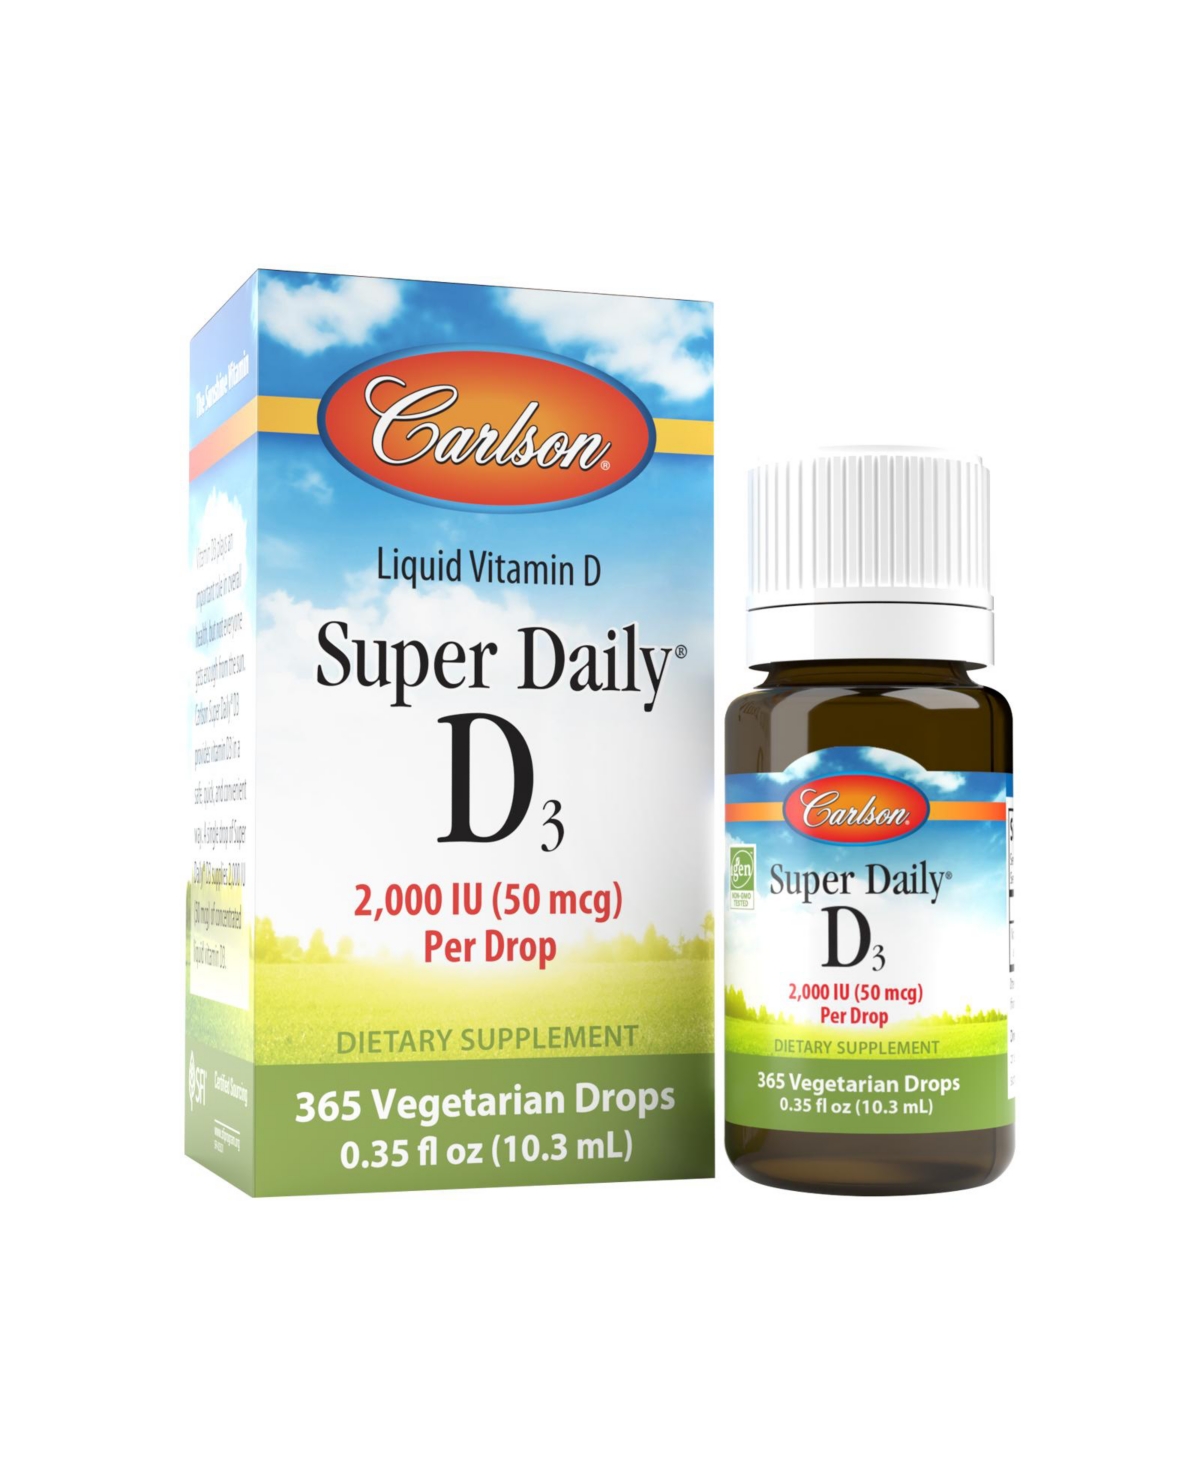 Carlson - Super Daily D3 2,000 Iu (50 mcg) per Drop, Vitamin D Drops, 1-Year Supply, Vegetarian, Unflavored, 365 Drops